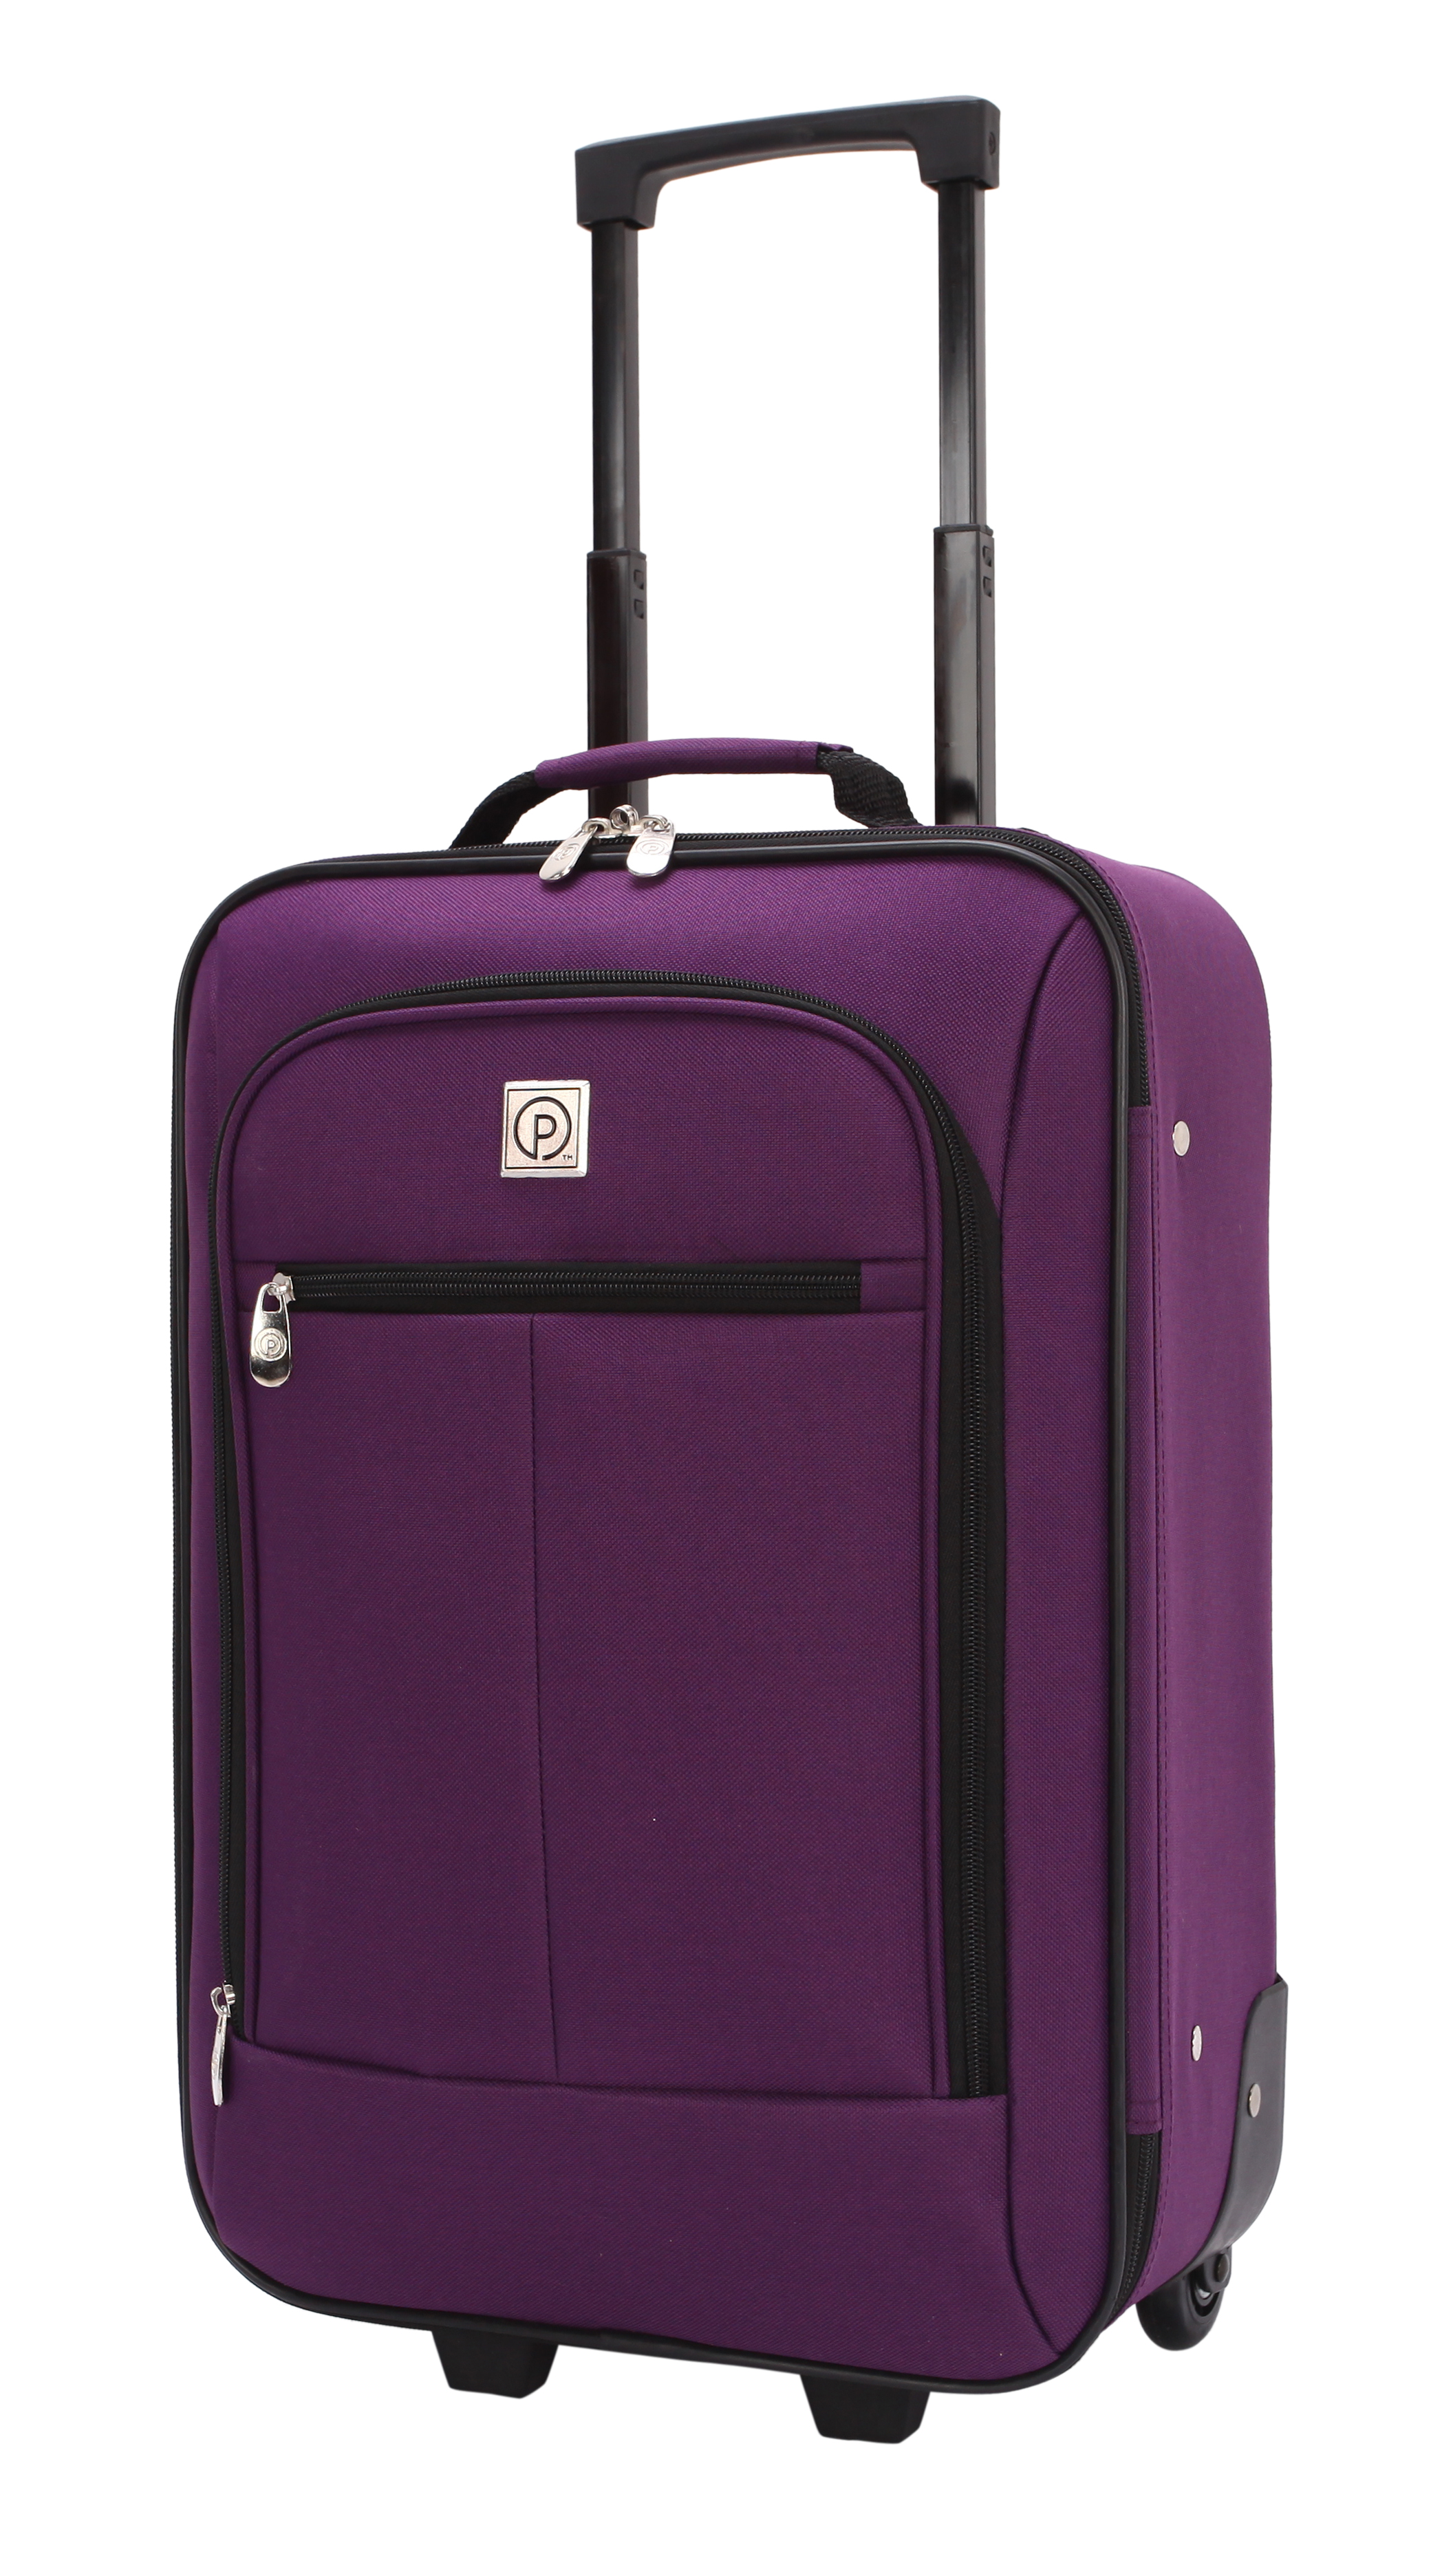 Protege Pilot Case 18" Carry-on Luggage, Purple, 12.5"L x 6.5"D x 19.25"H - image 5 of 7